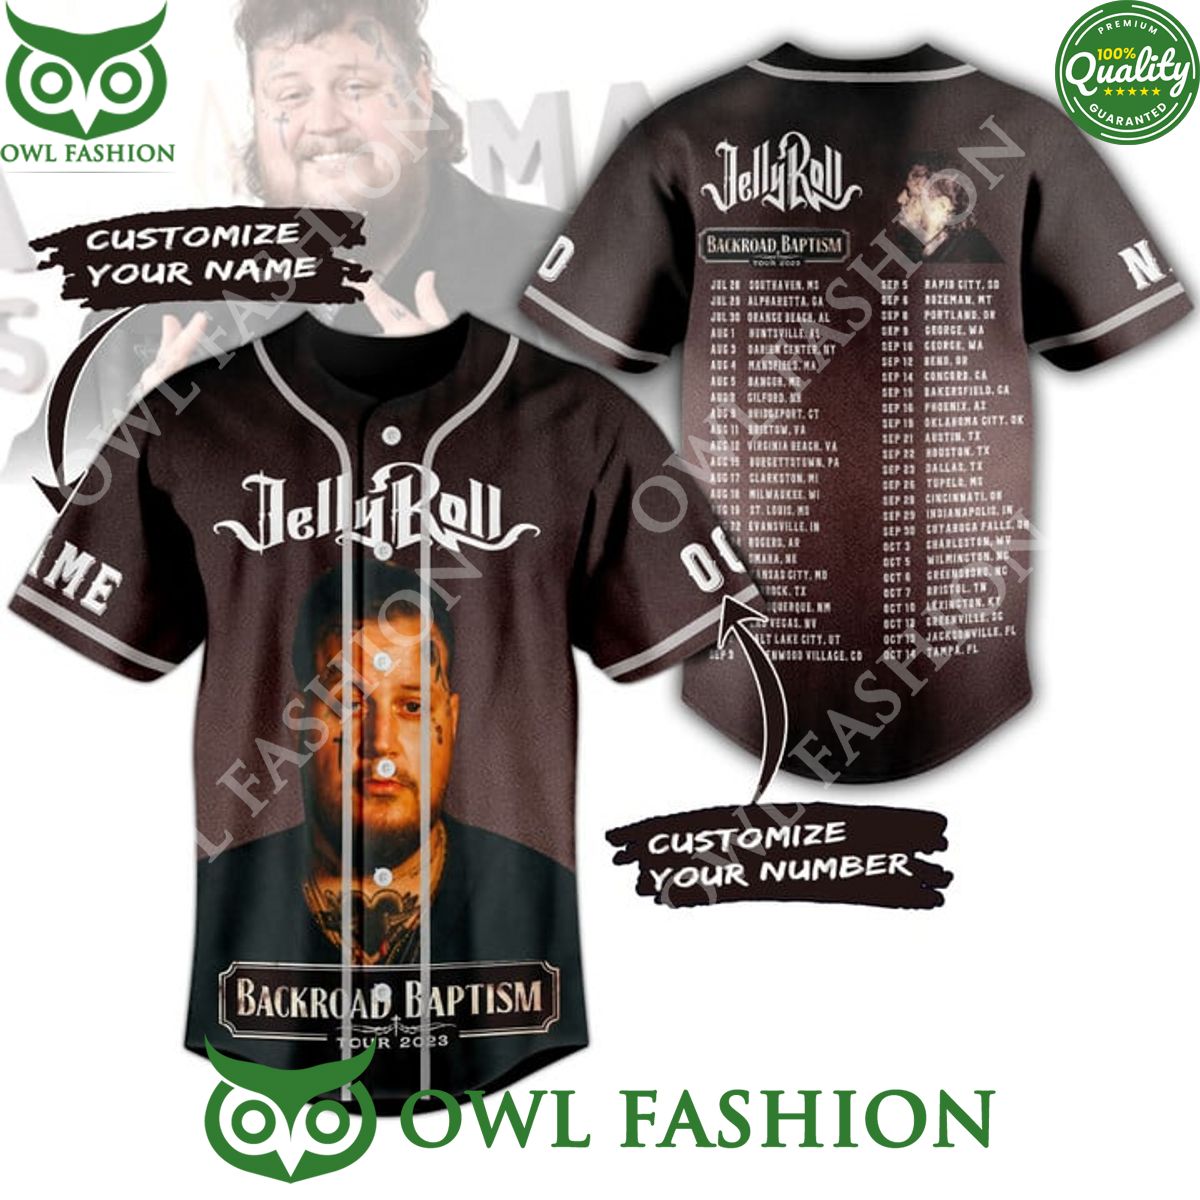 jelly roll tour 2023 backroad baptism baseball jersey shirt custom name number 1 OJADa.jpg